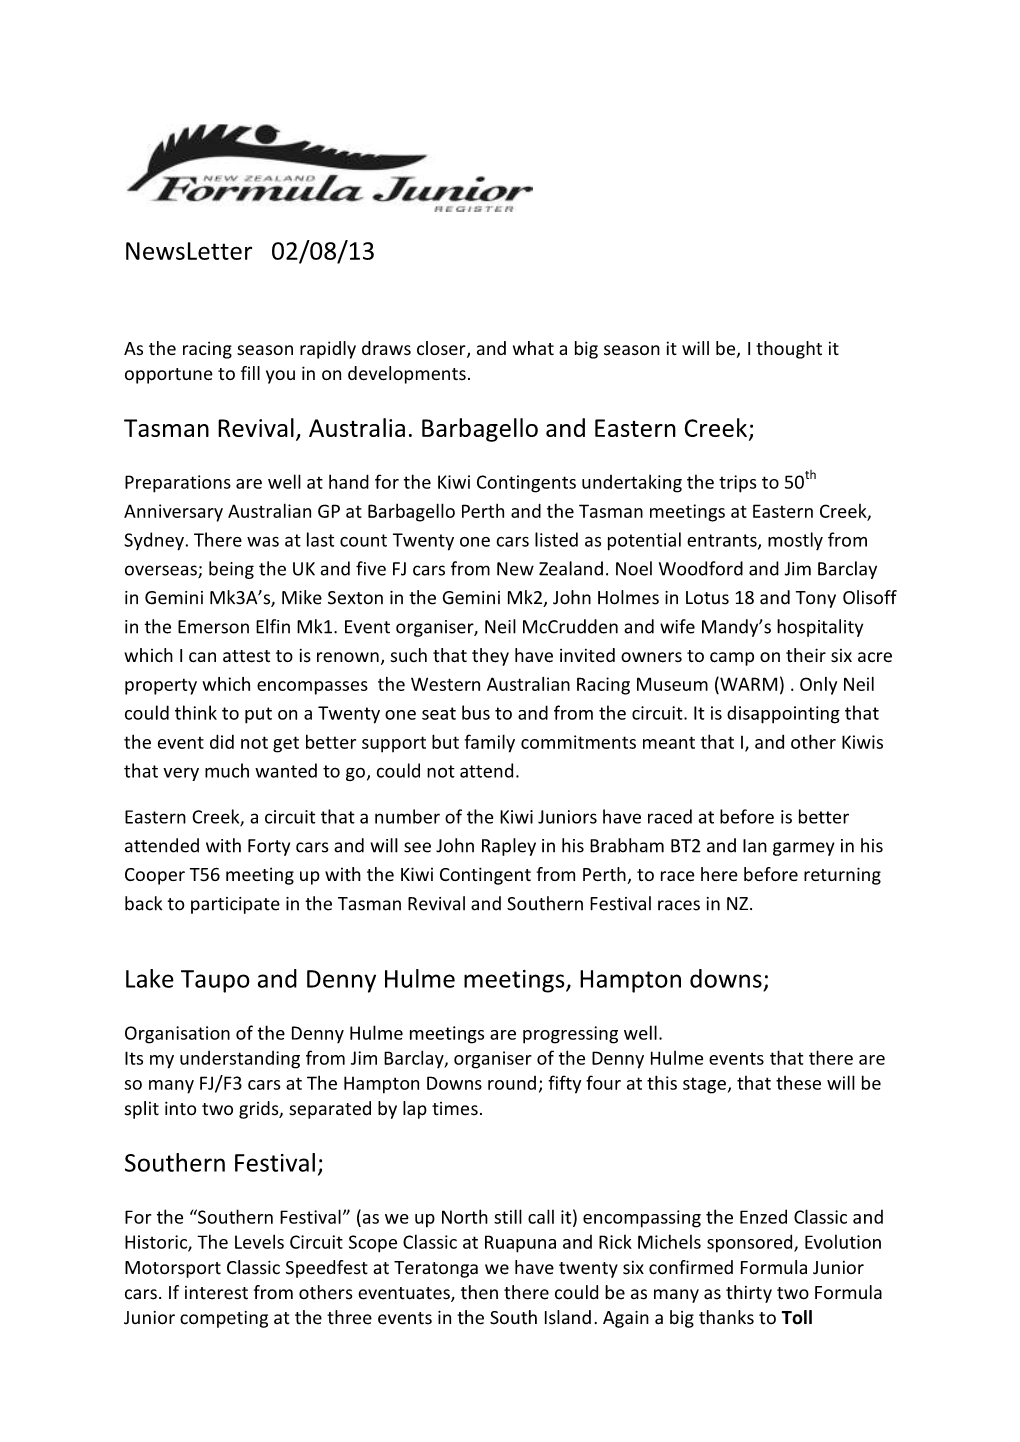 Newsletter 02/08/13 Tasman Revival, Australia. Barbagello And